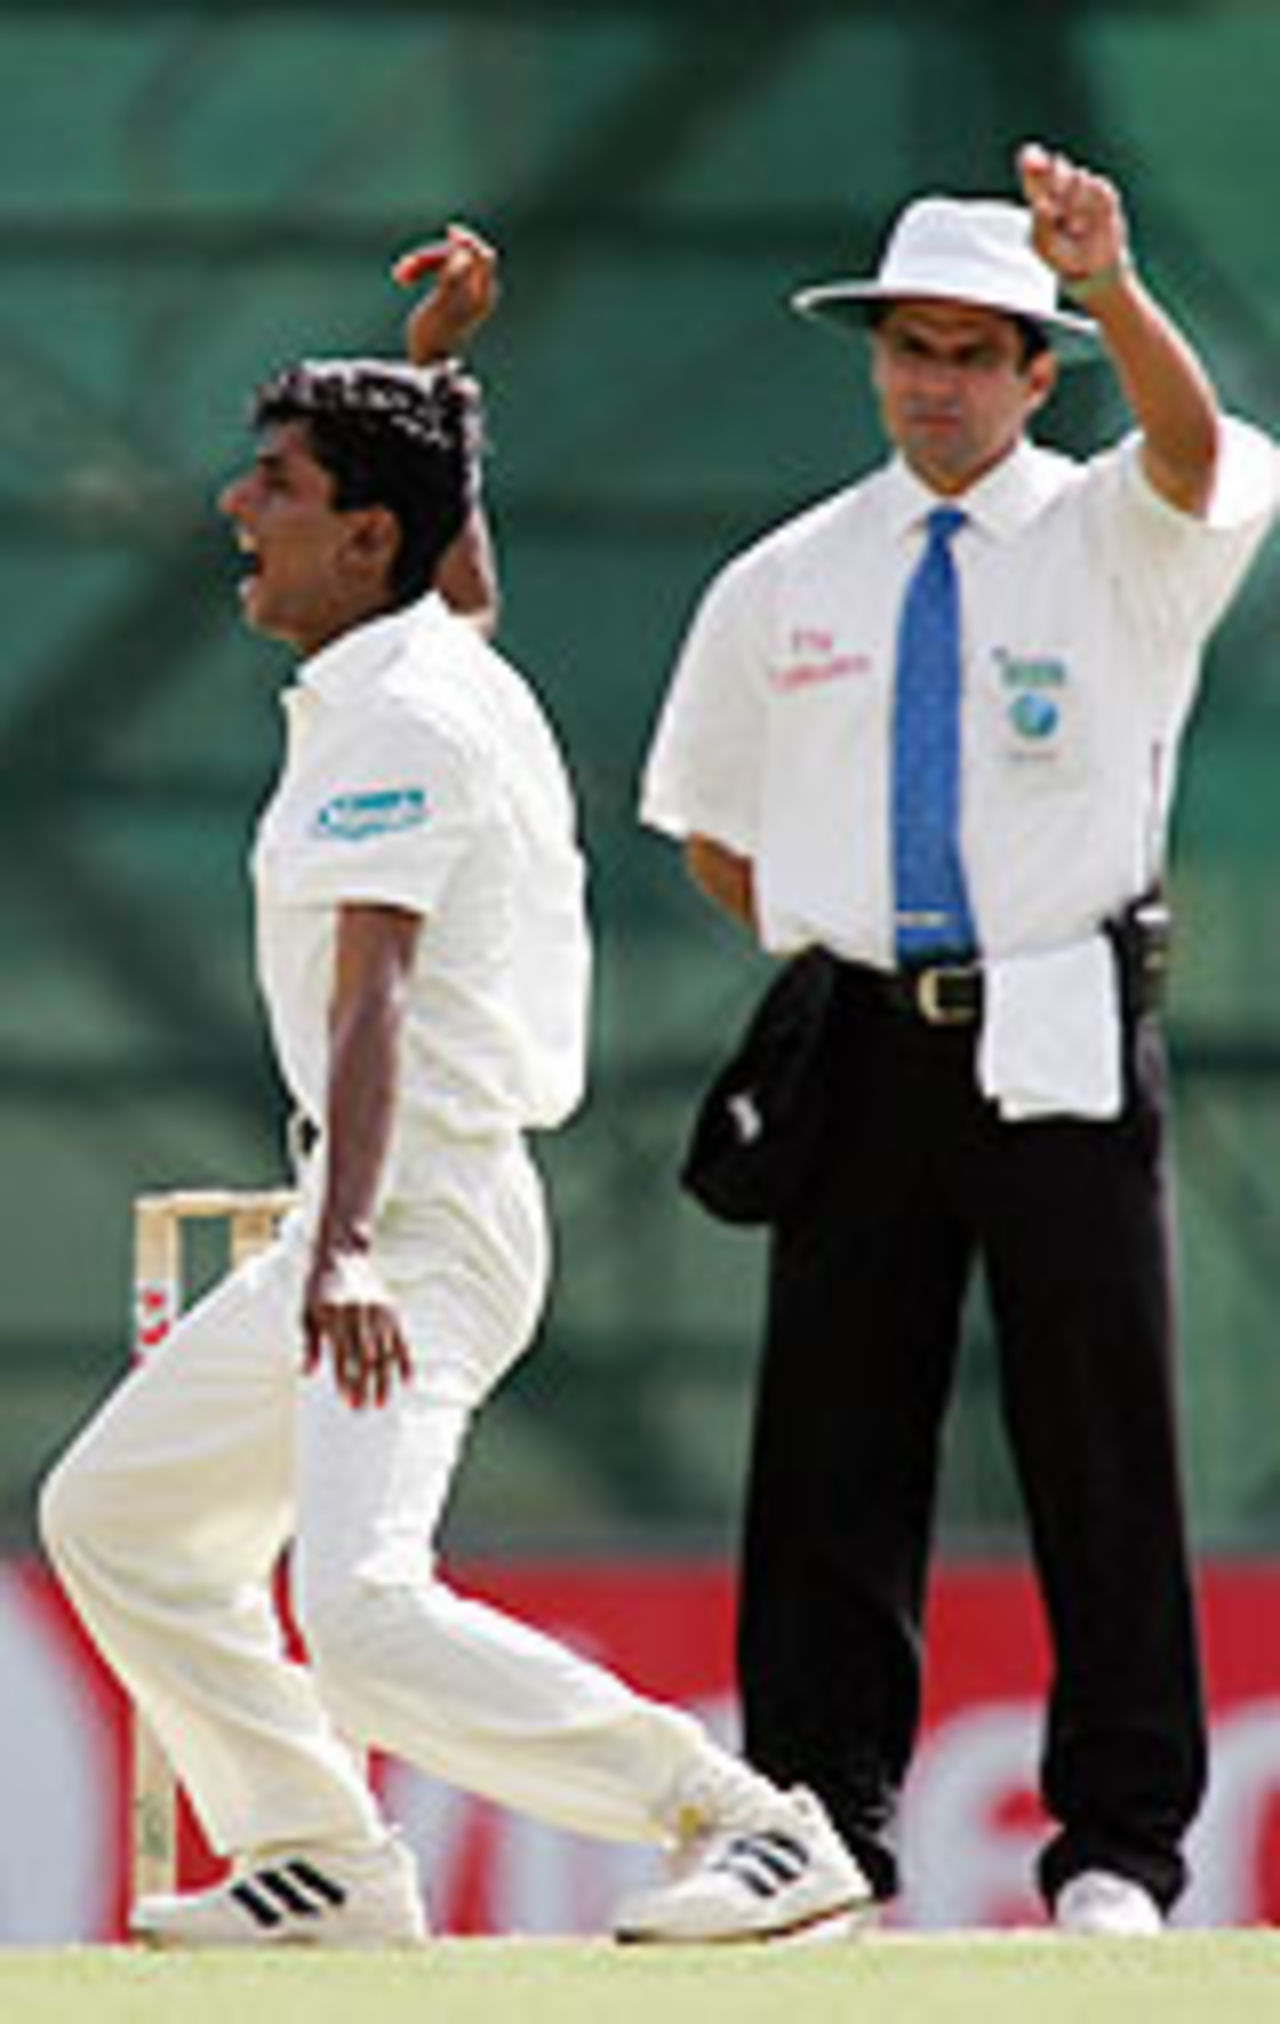 Upul Chandana celebrates after dismissing Damien Martyn, Australia v Sri Lanka, 2nd Test, Cairns, 2nd day, July 10, 2004